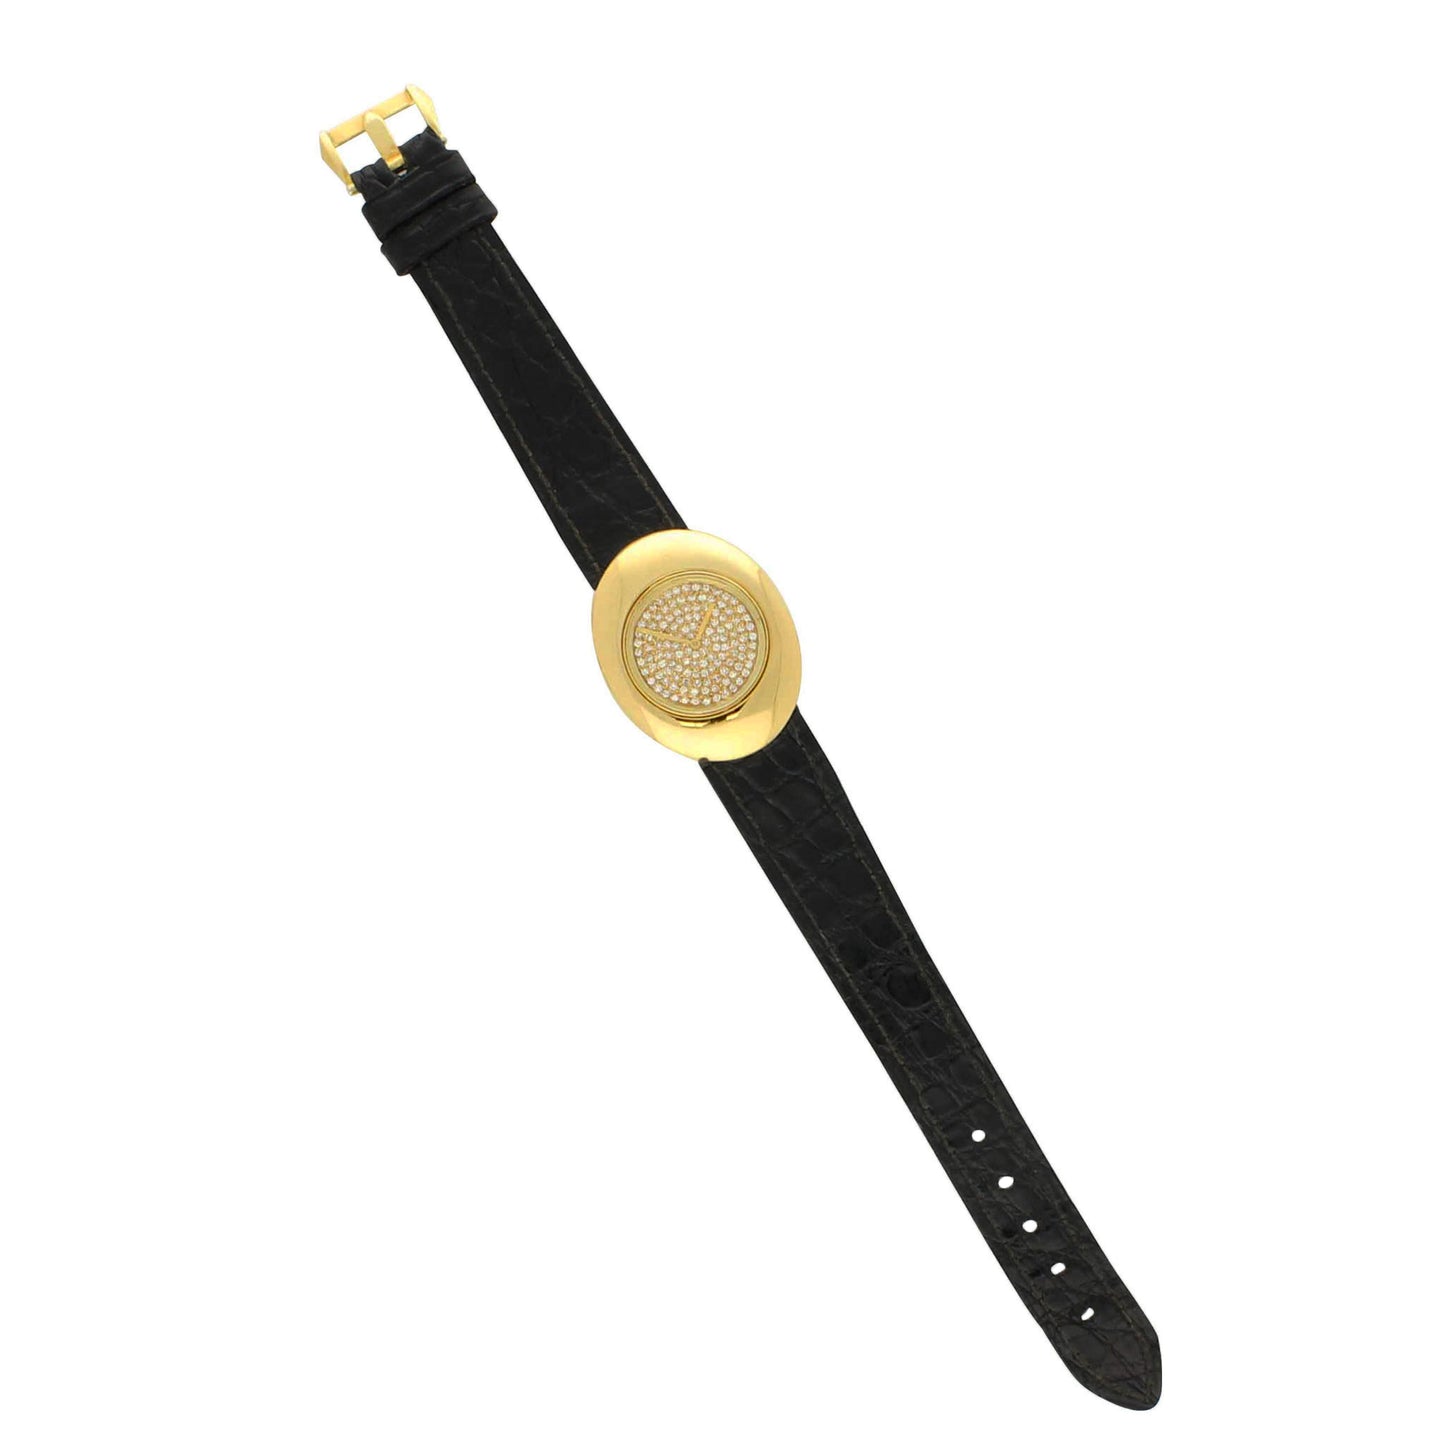 18ct yellow gold and diamond set wristwatch. Made 1960s